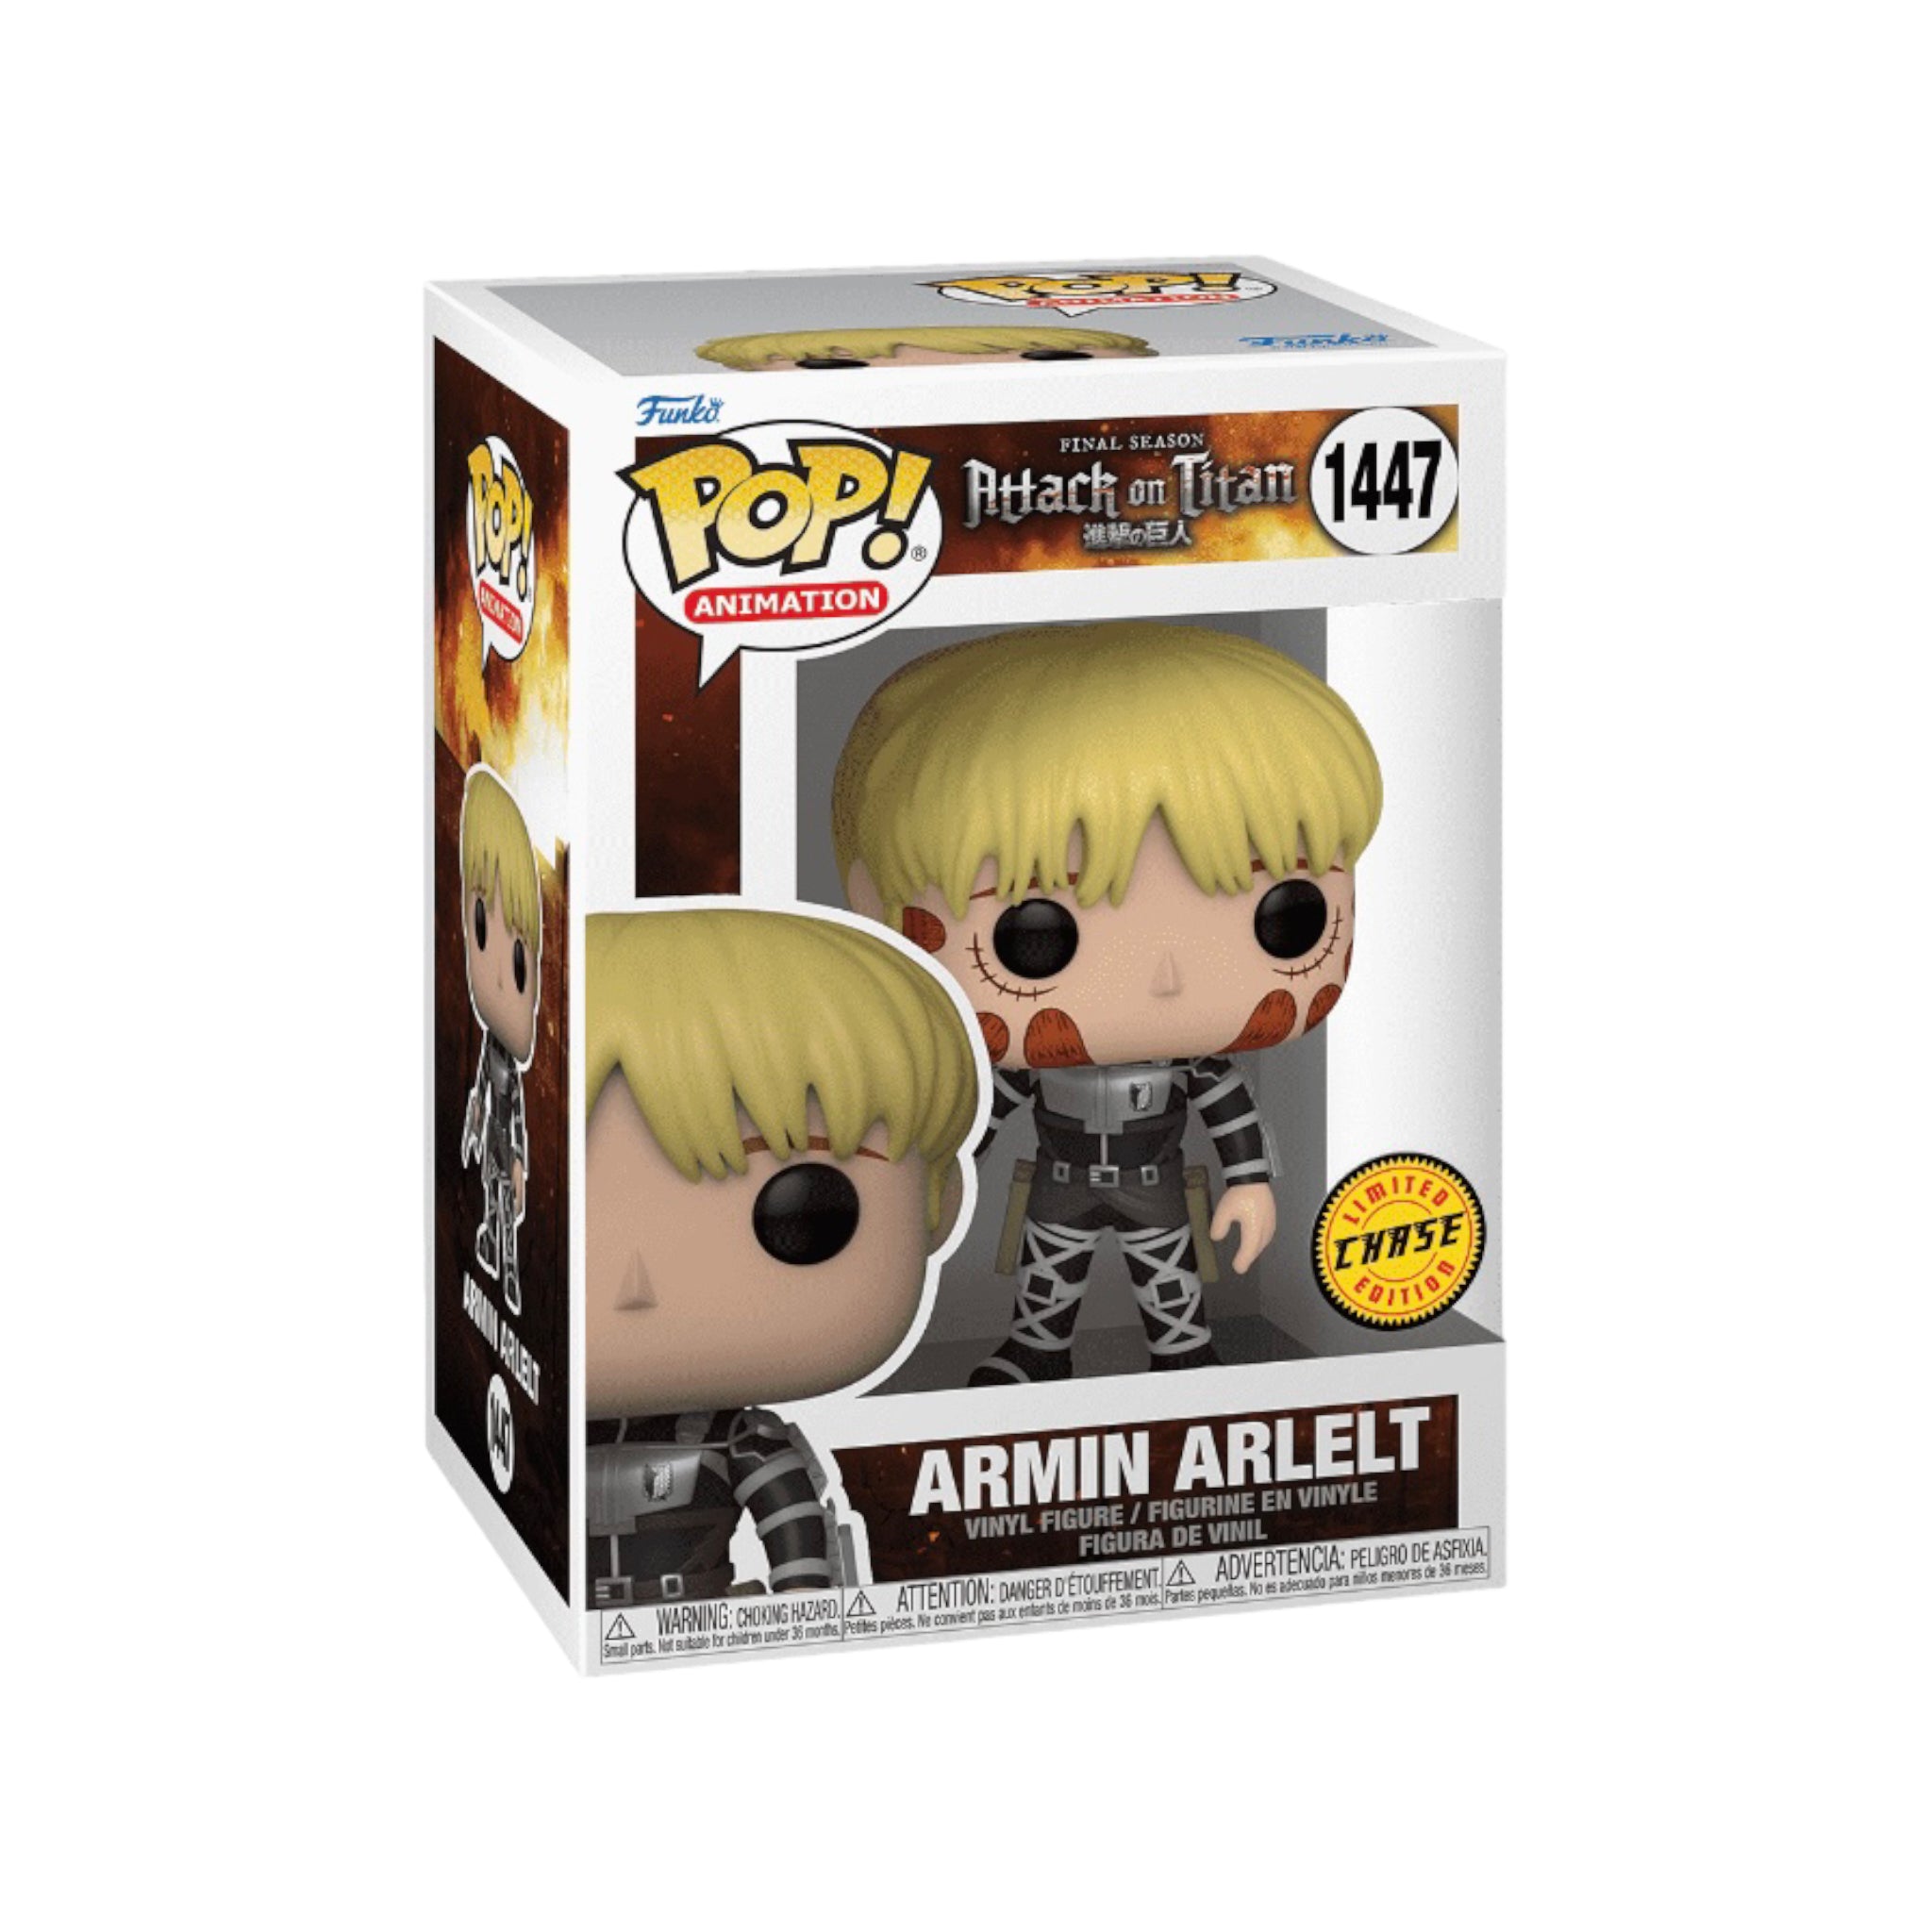 Armin Arlelt #1447 (Chase) Funko Pop! - Attack on Titan